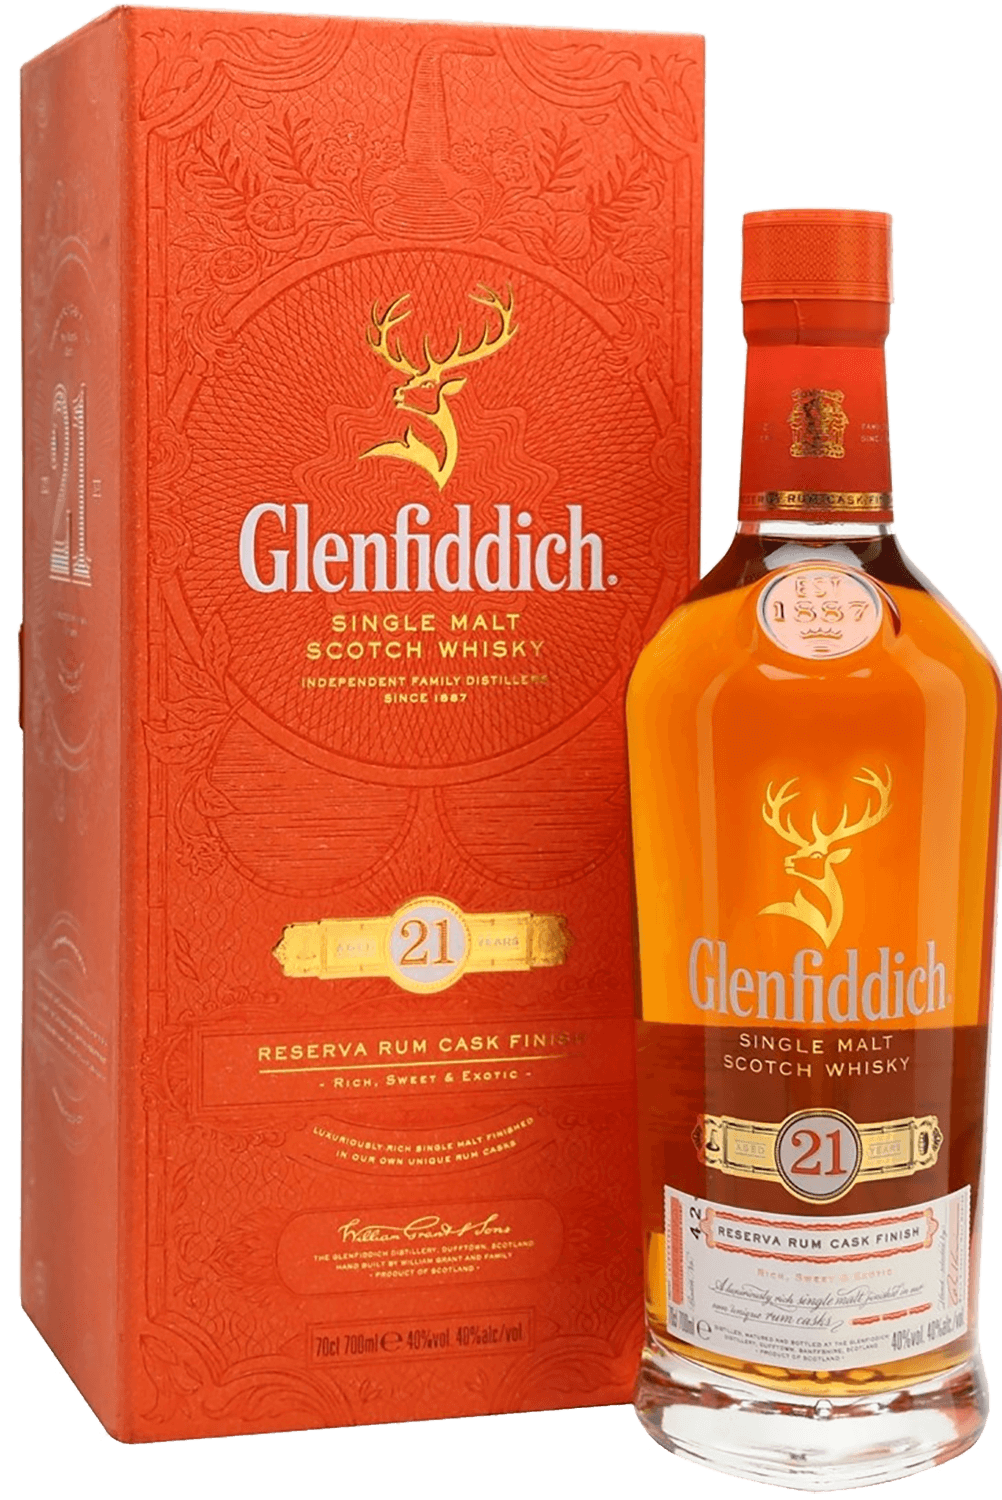 Glenfiddich Single Malt Scotch Whisky 21 yo (gift box) glenfiddich single malt scotch whisky 12 y o gift box with 2 glasses